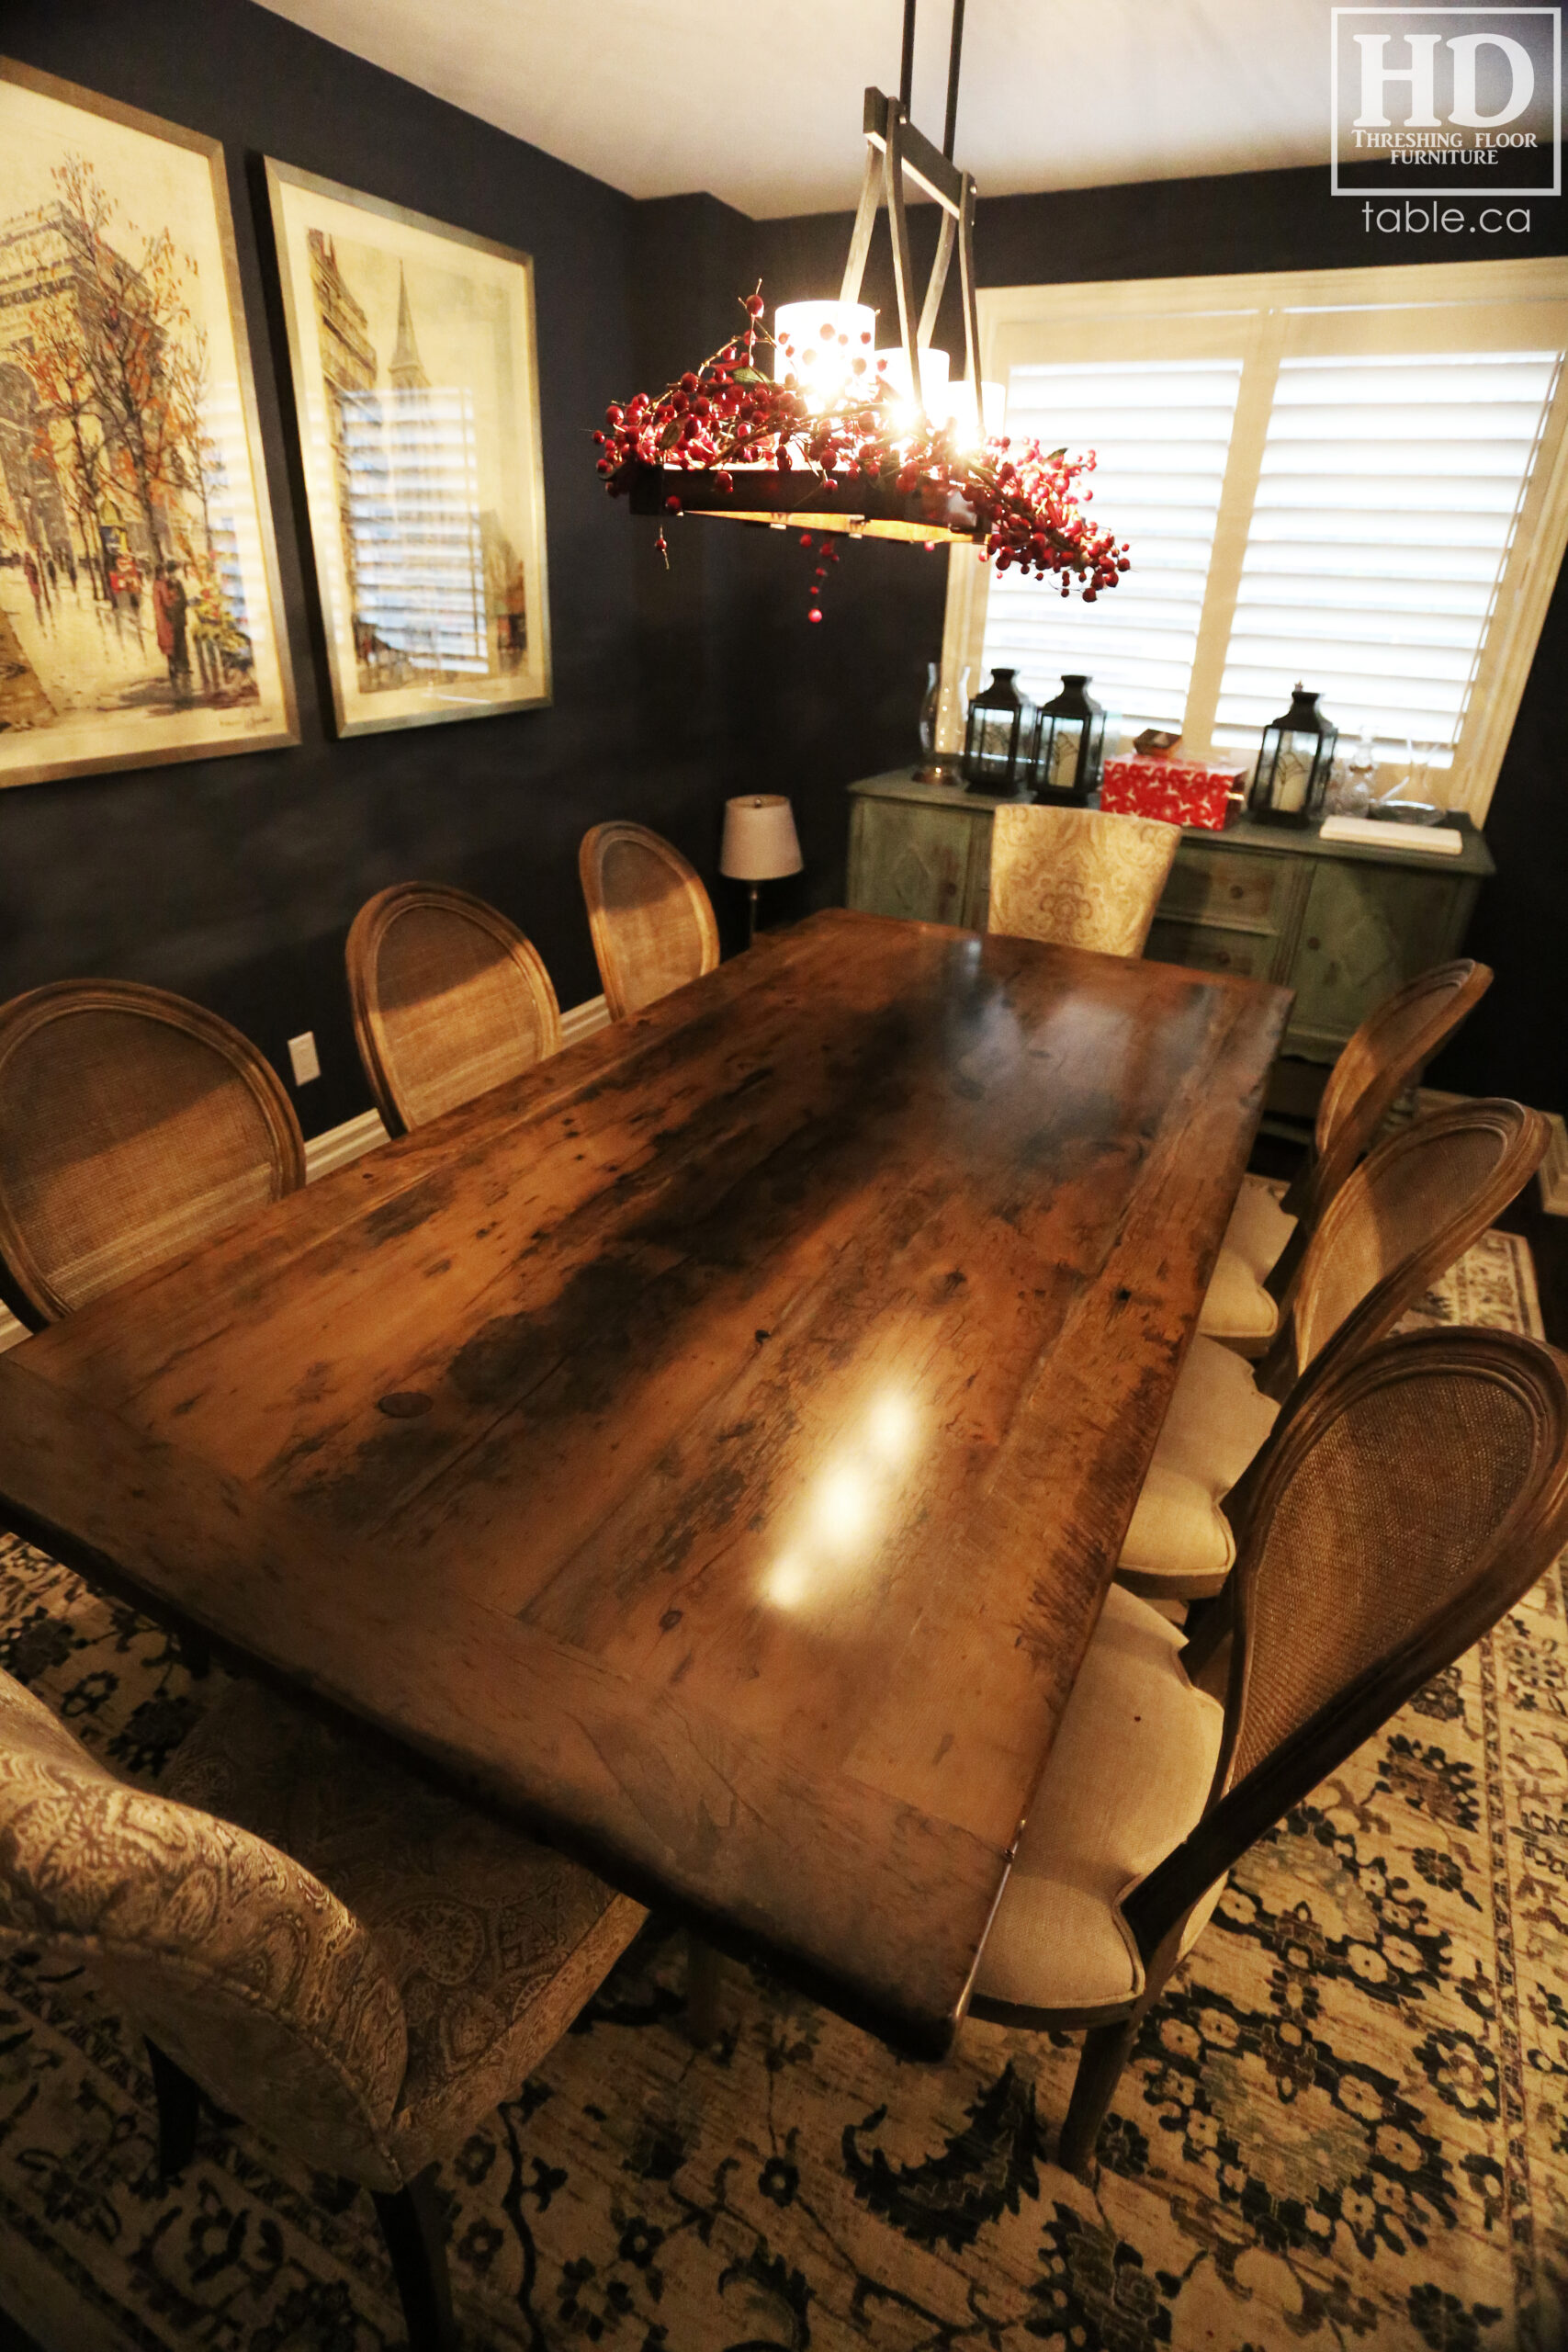 Grey Reclaimed Wood Table by HD Threshing Floor Furniture / www.table.ca